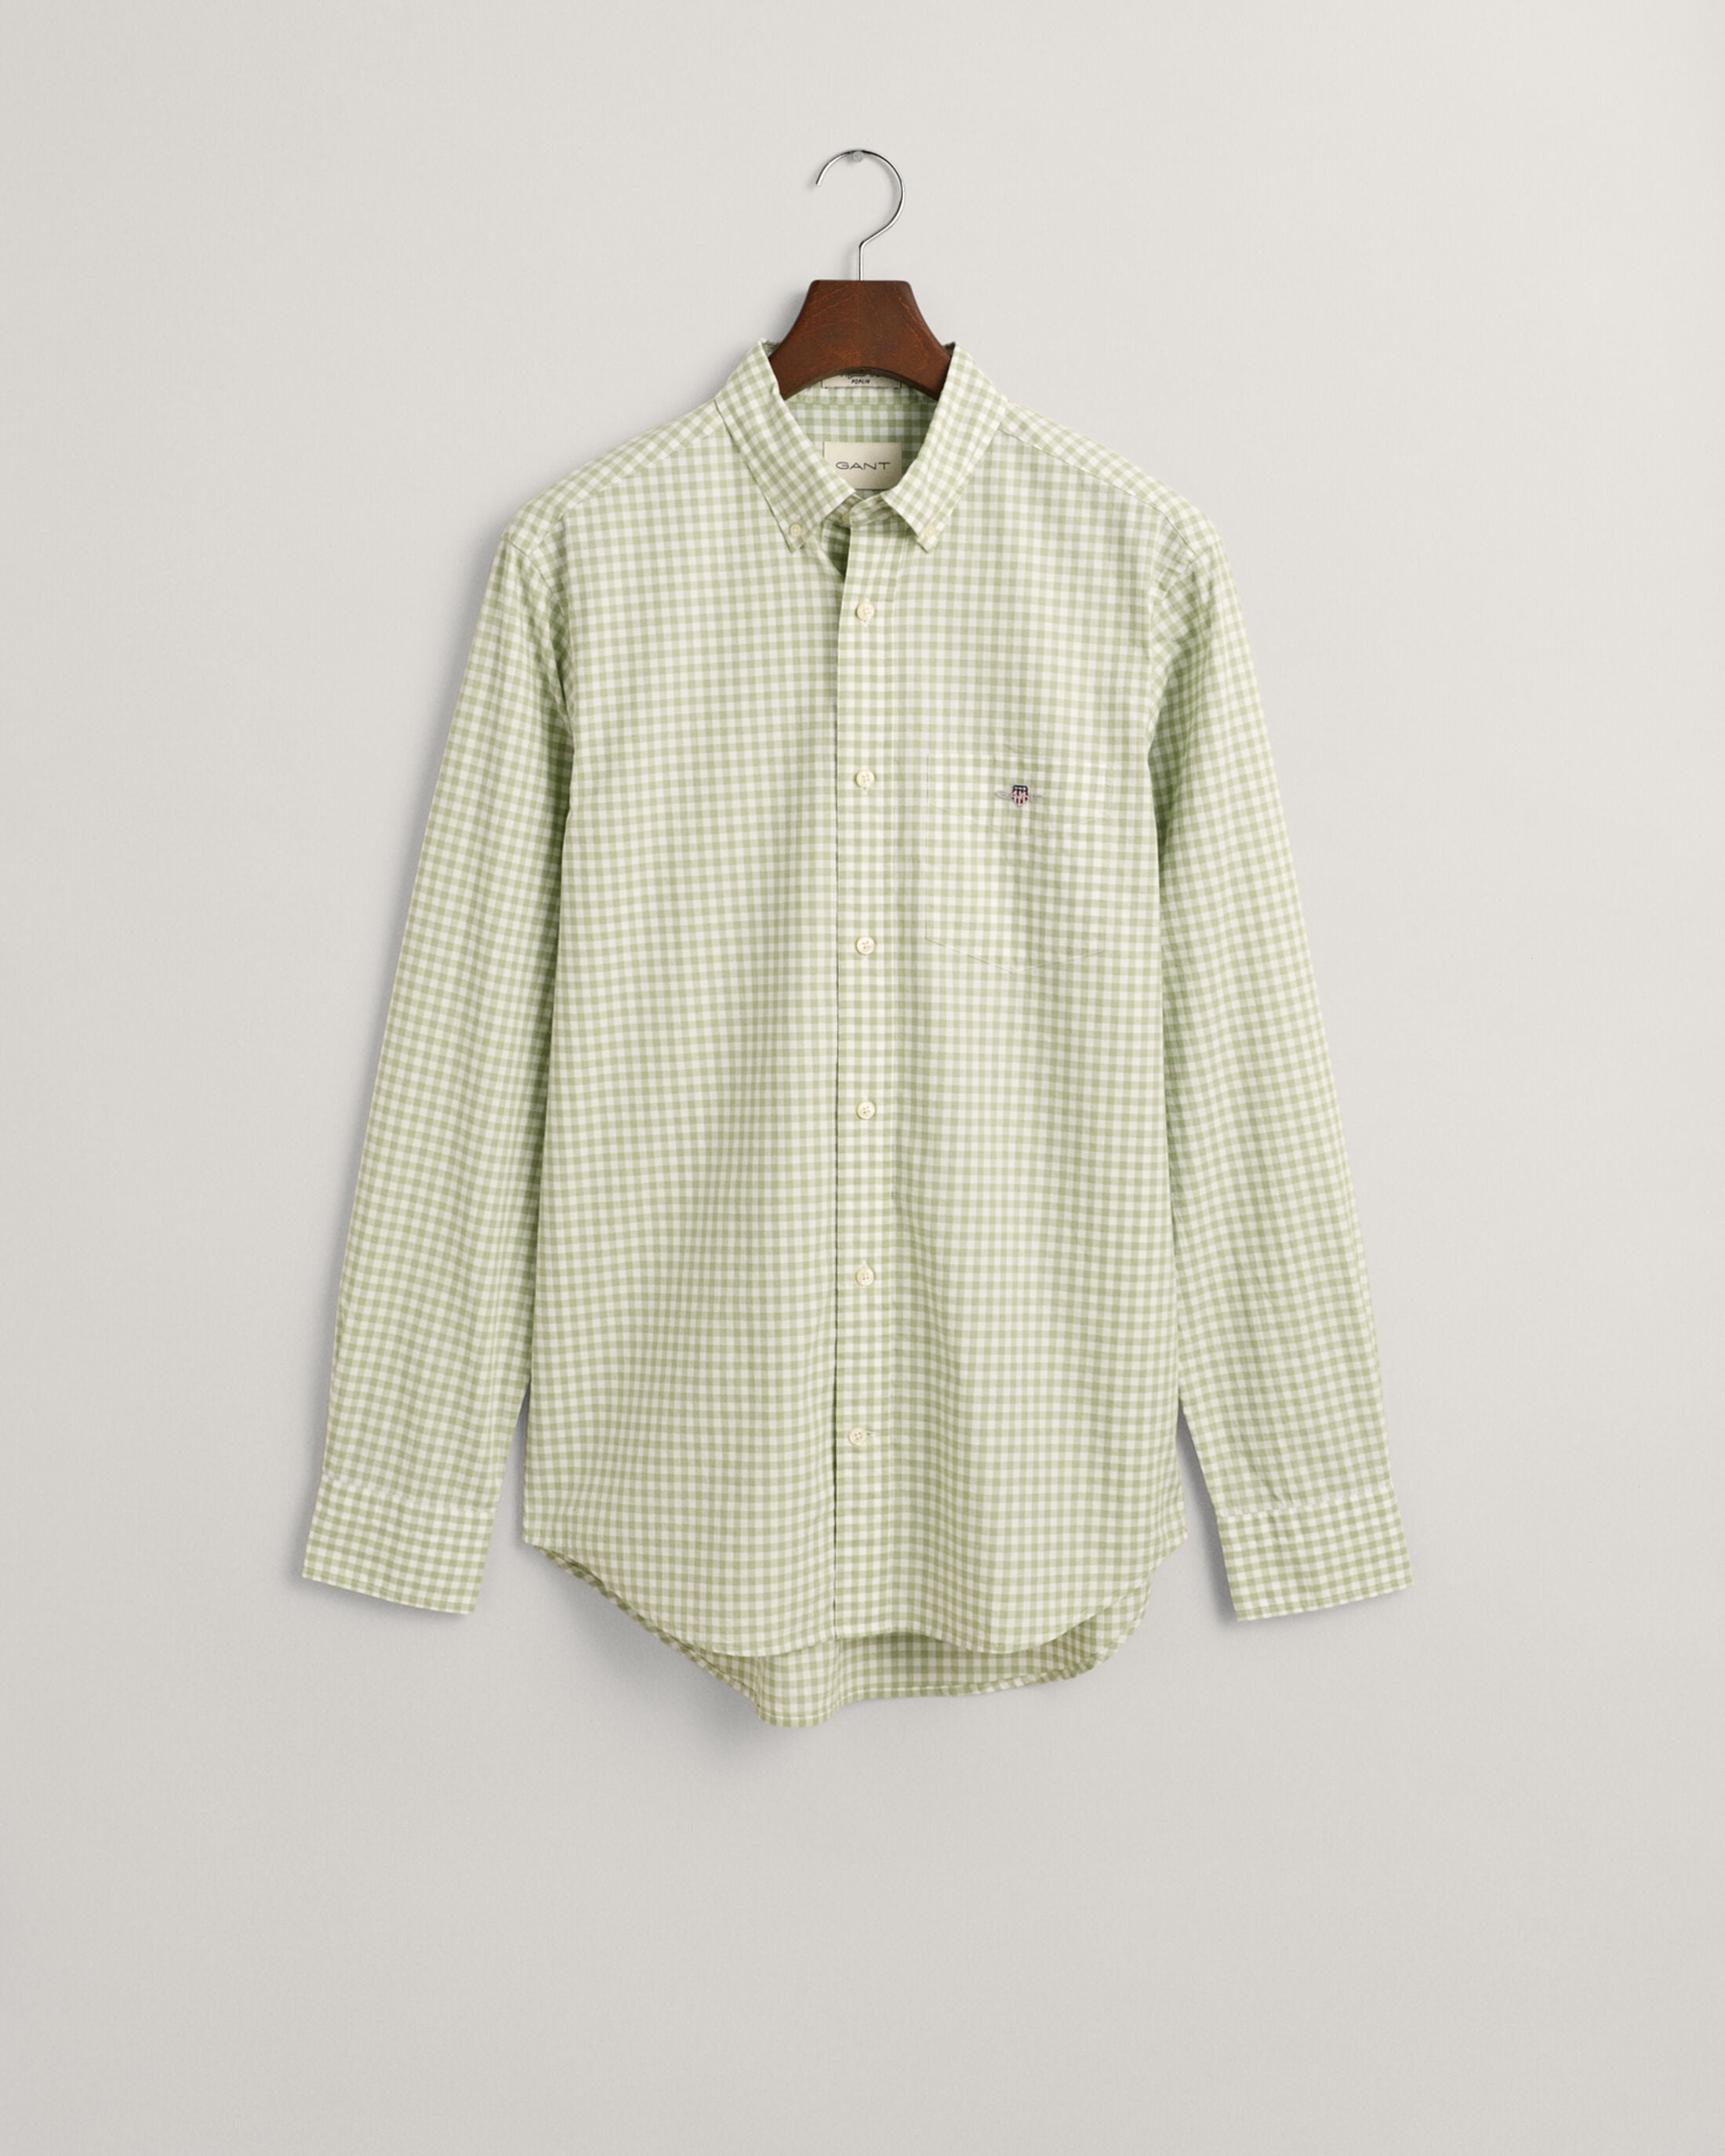 Gant Gingham Broadcloth Shirt